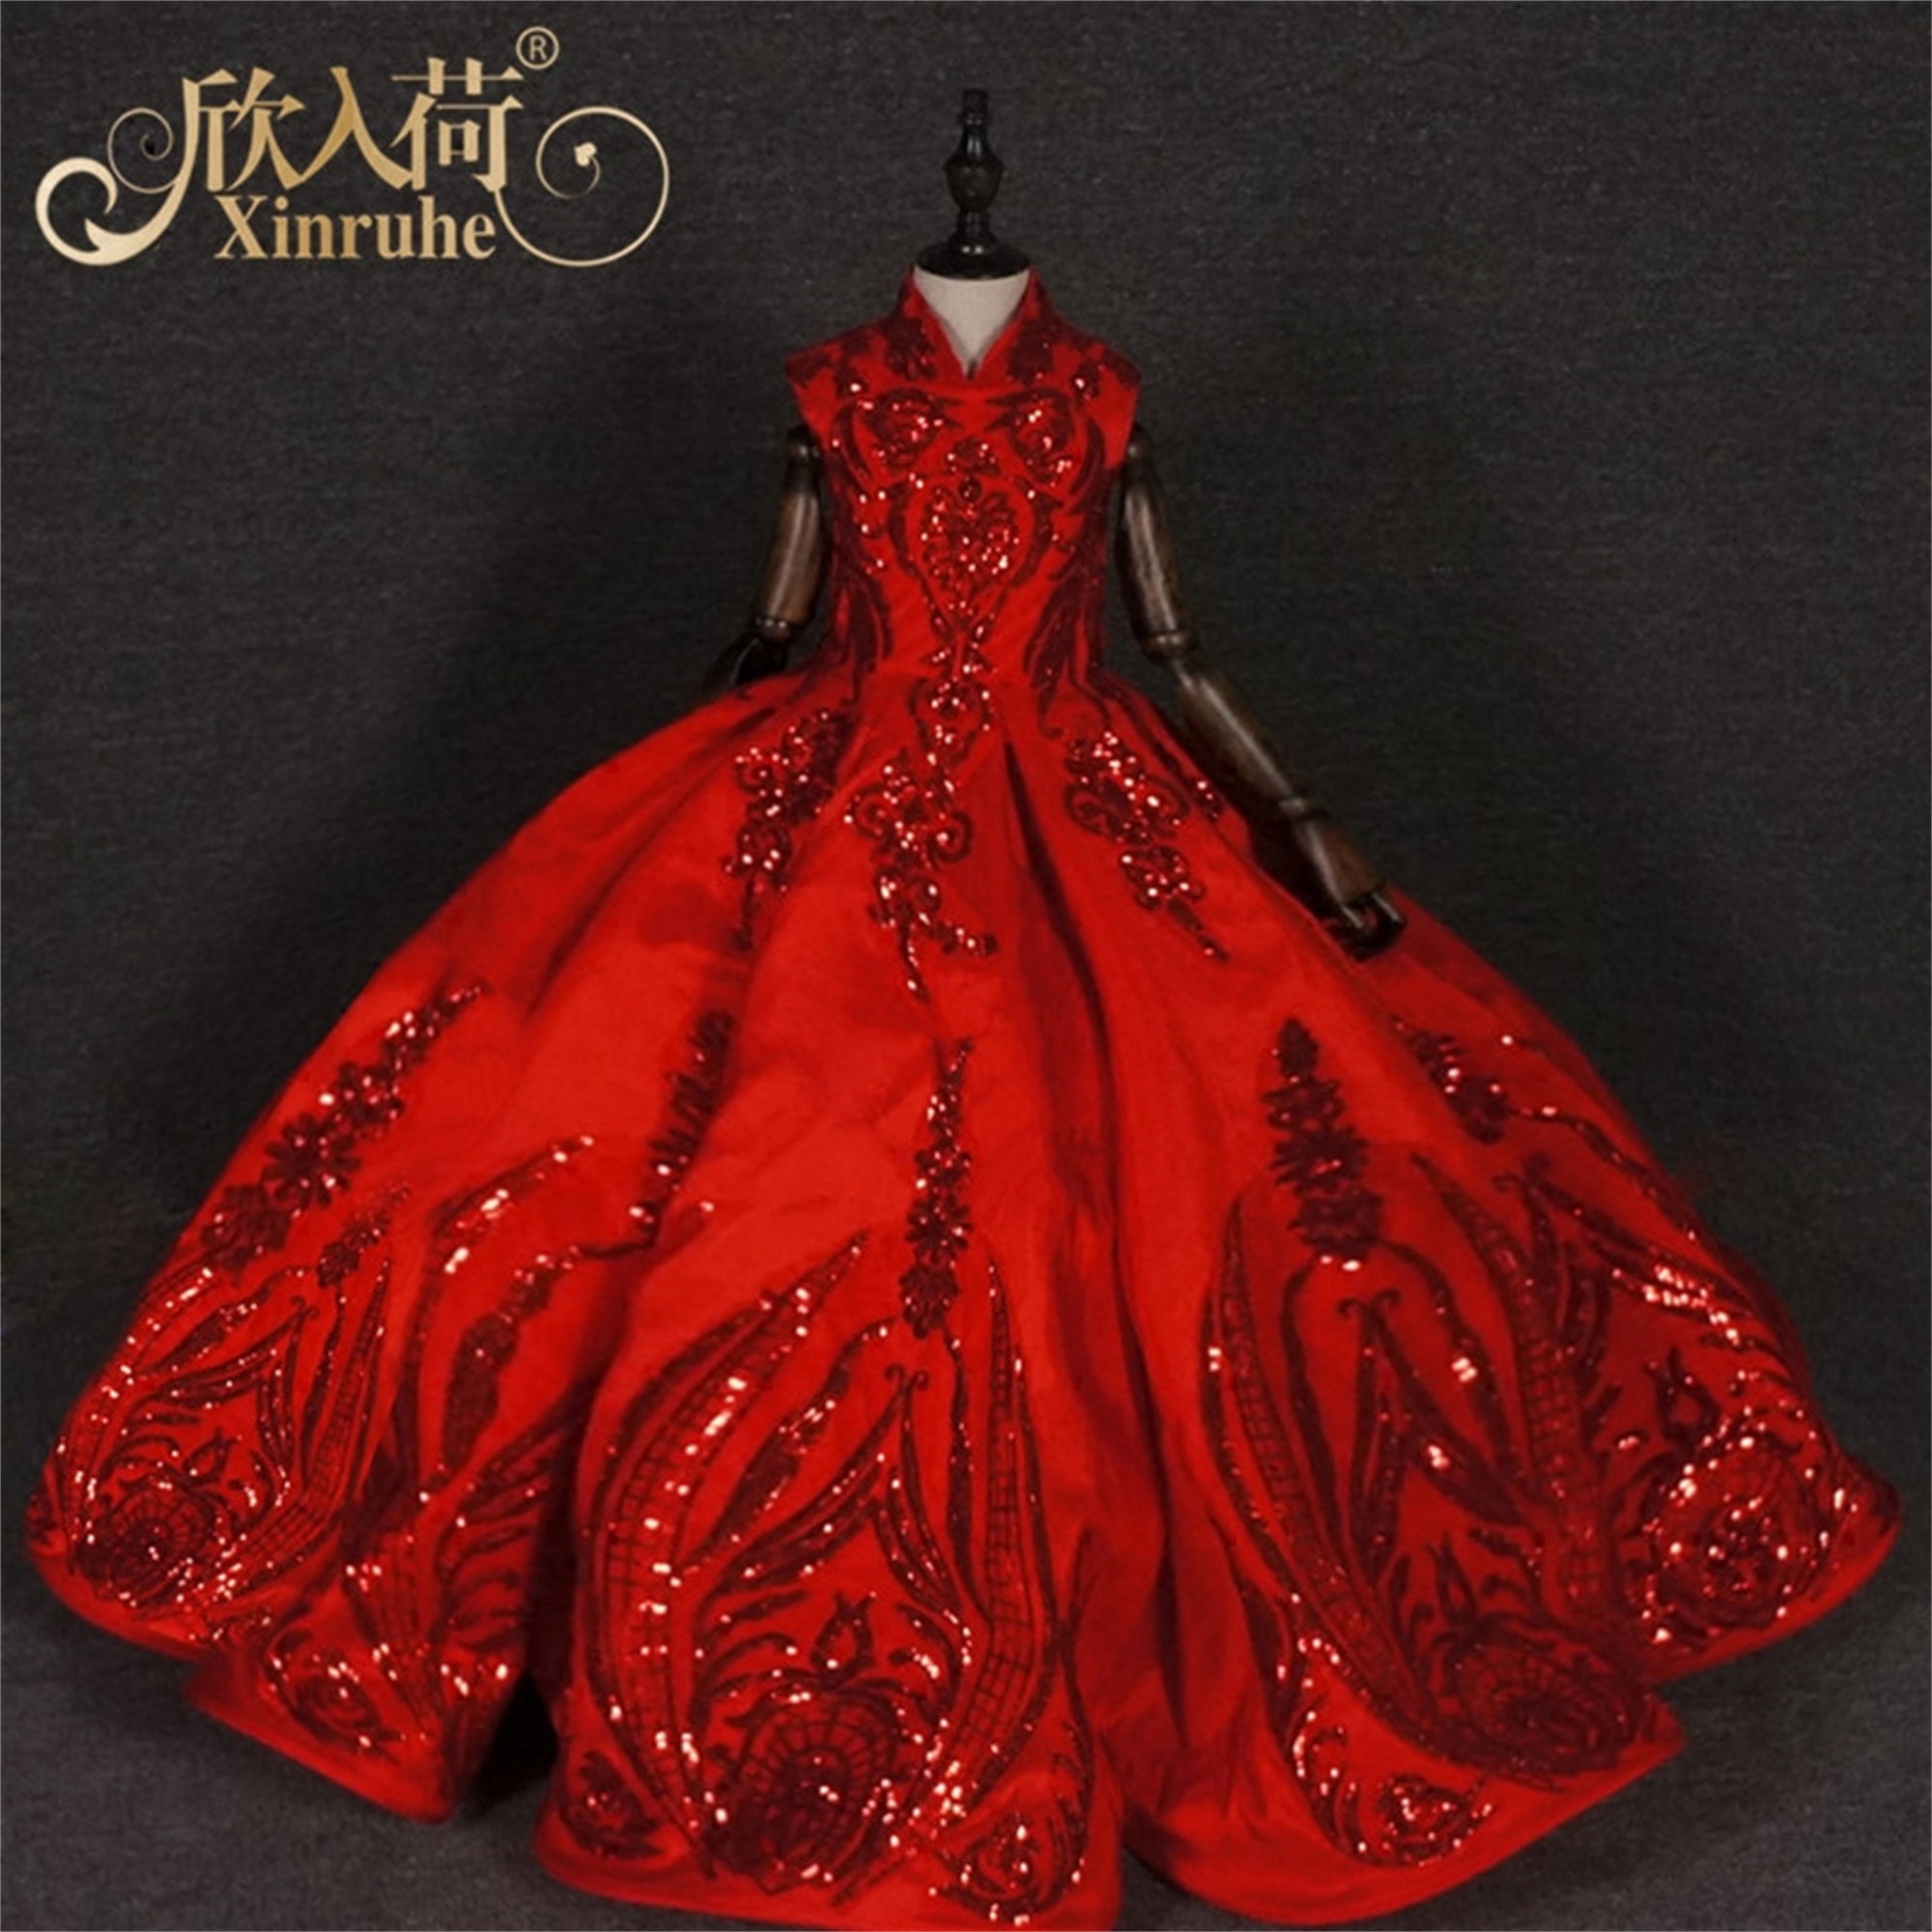 Red Women's Ball Gown Dress, Strapless, Sweetheart Neckline